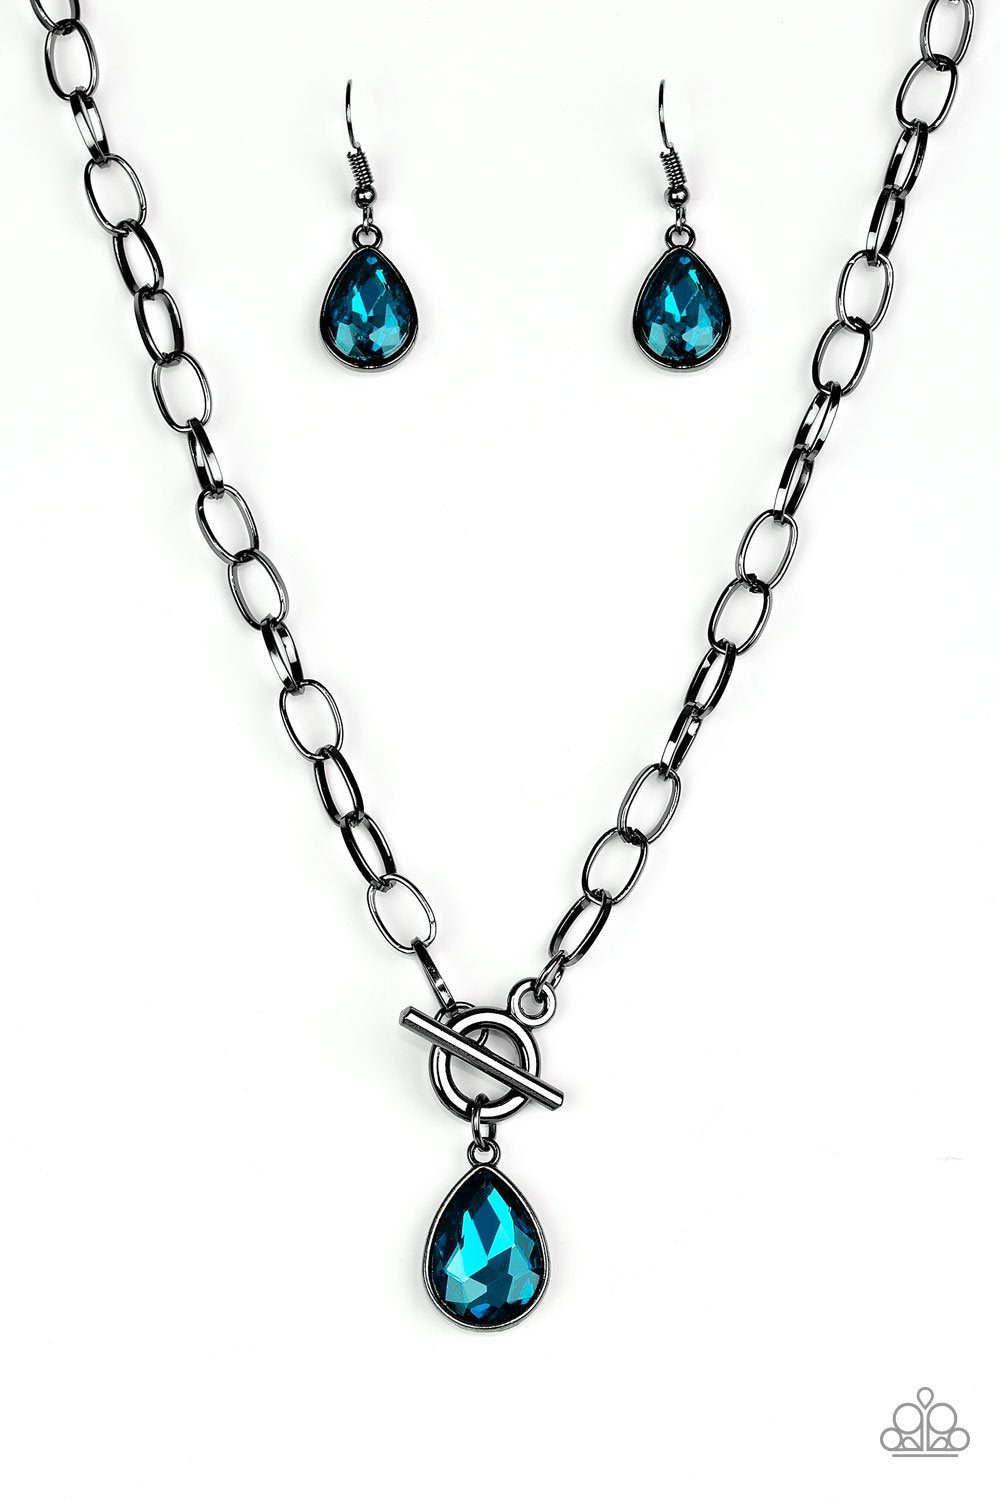 So Sorority - Blue Necklace freeshipping - JewLz4u Gemstone Gallery